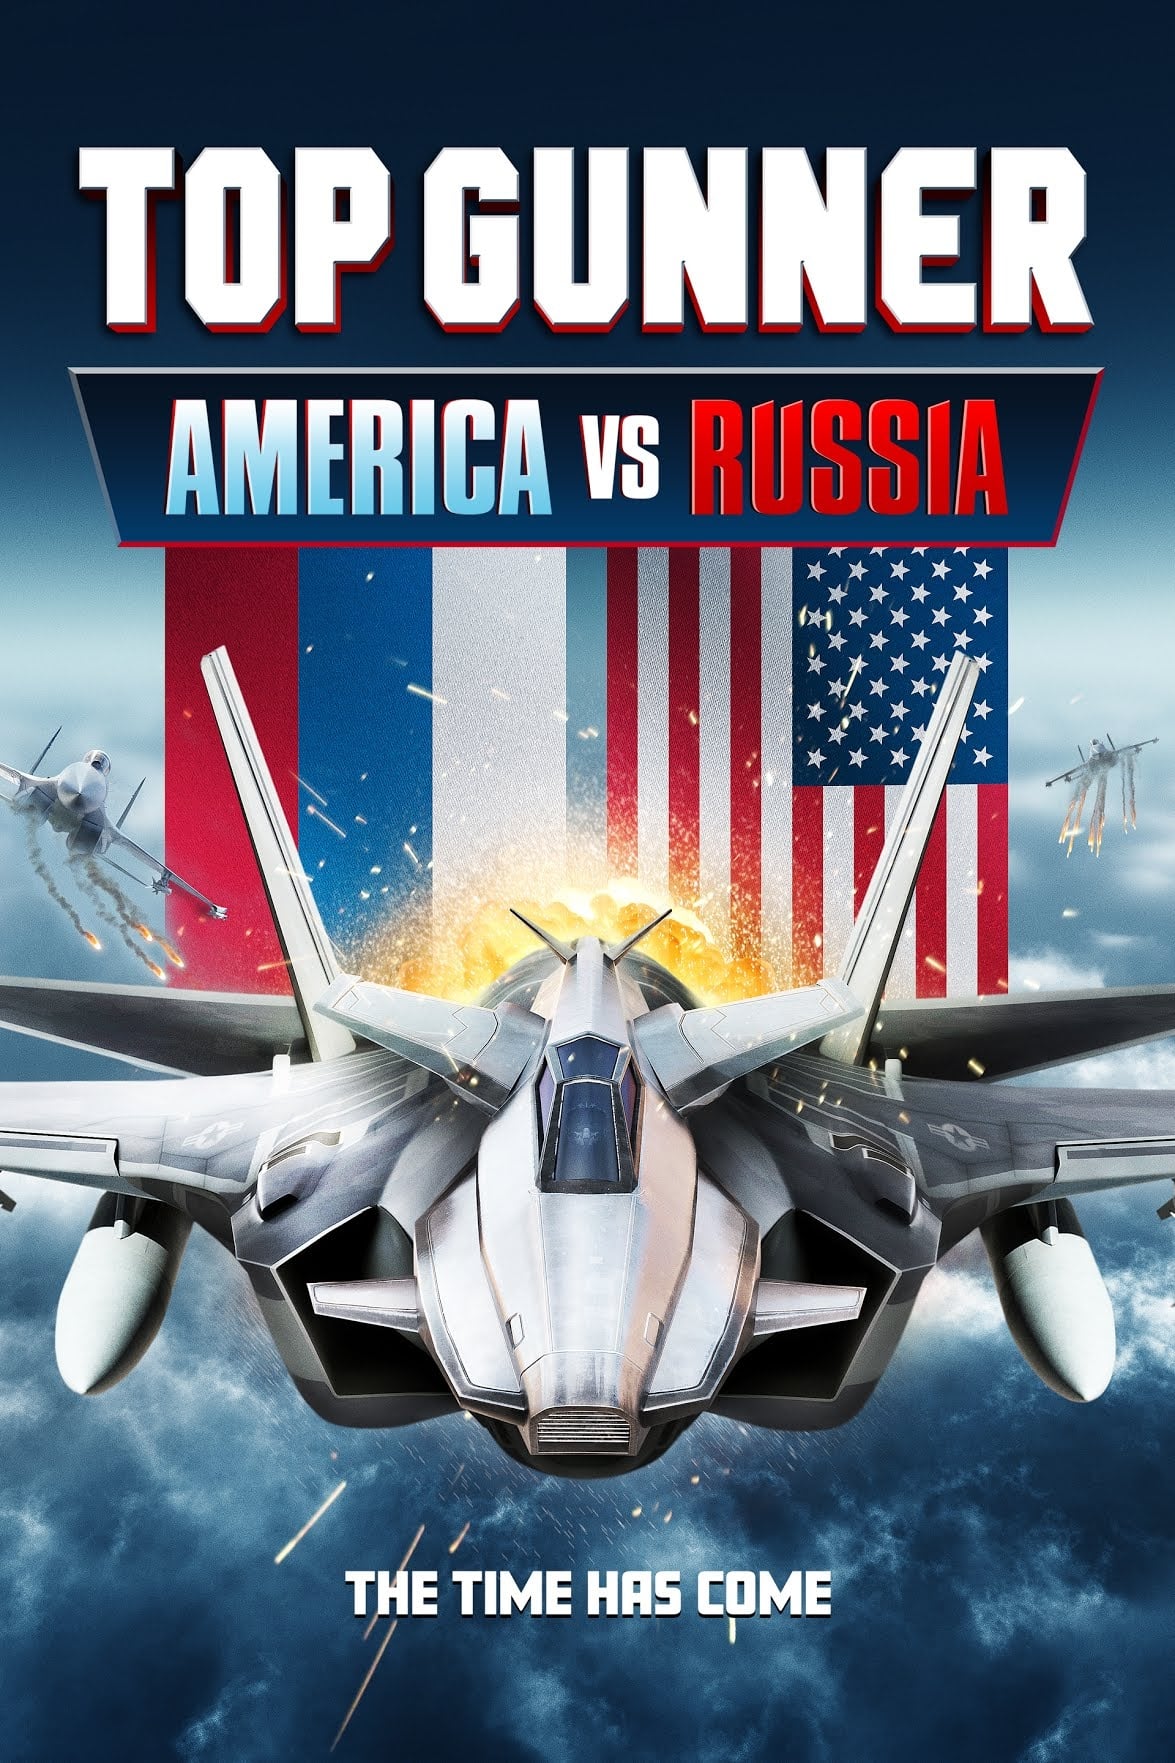 Top Gunner America Vs Russia